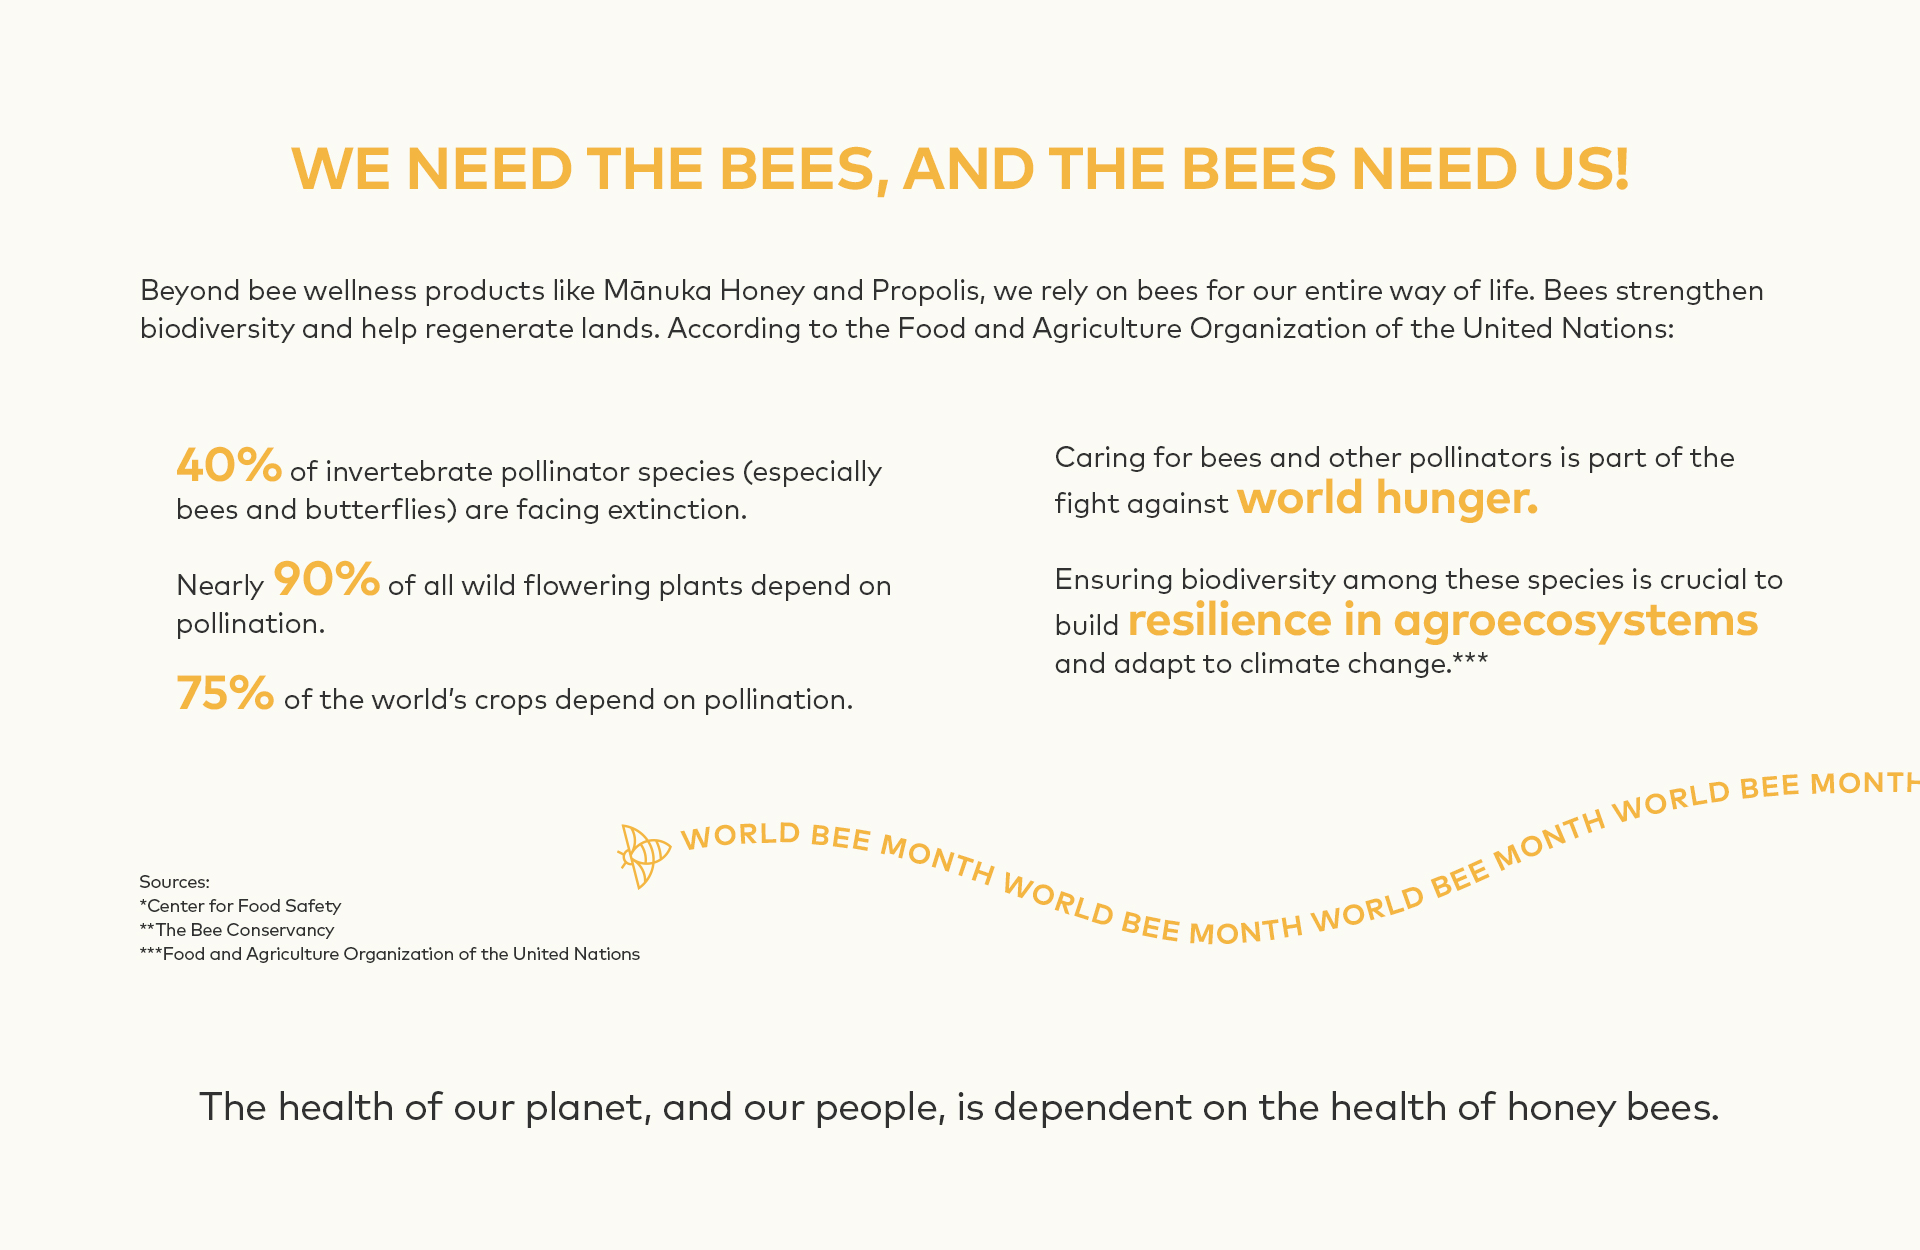 World Bee Day 2023